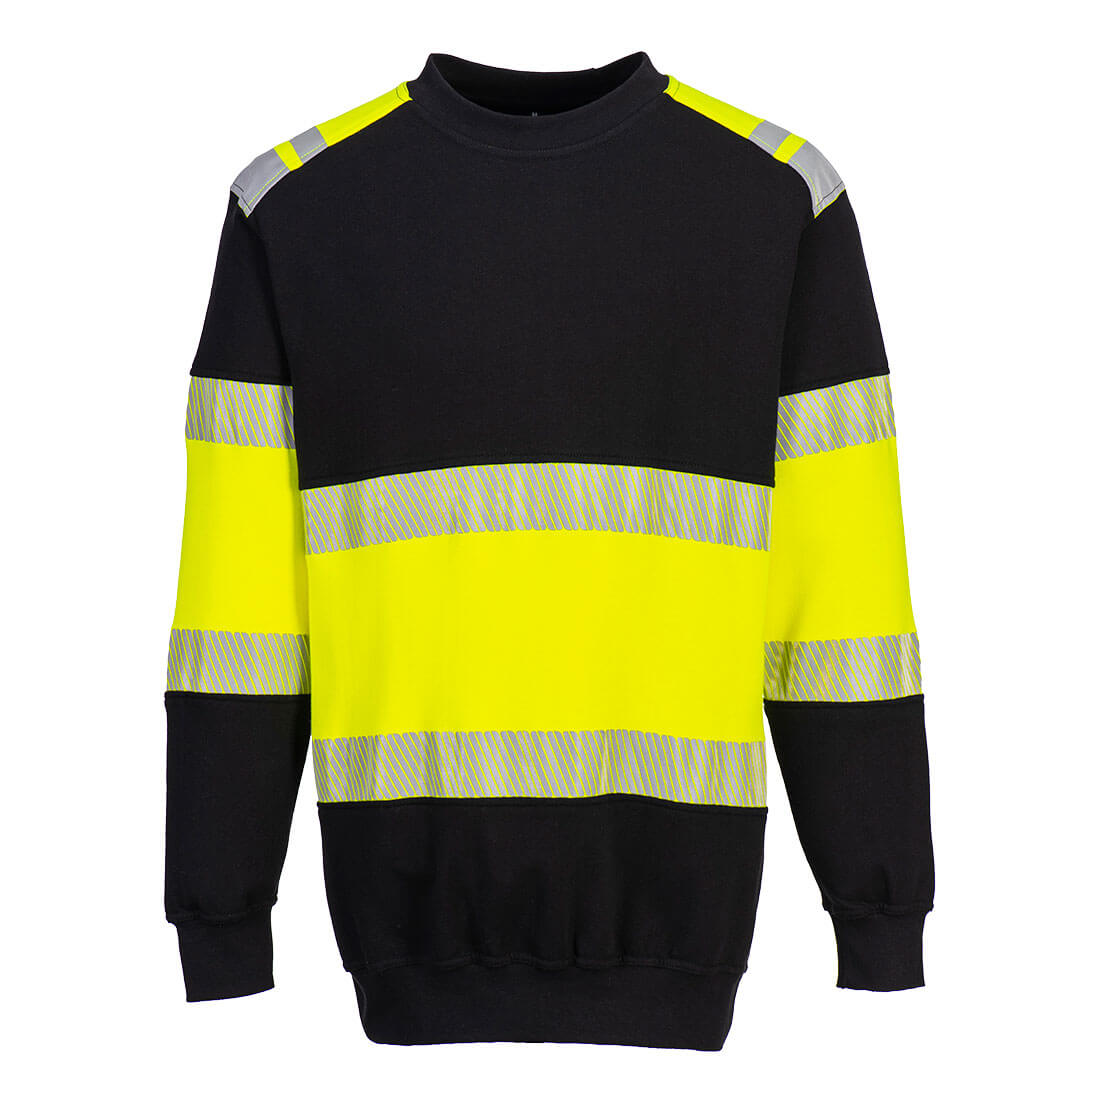 PW3 Flame Resistant Class 1 Sweatshirt   (FR716)